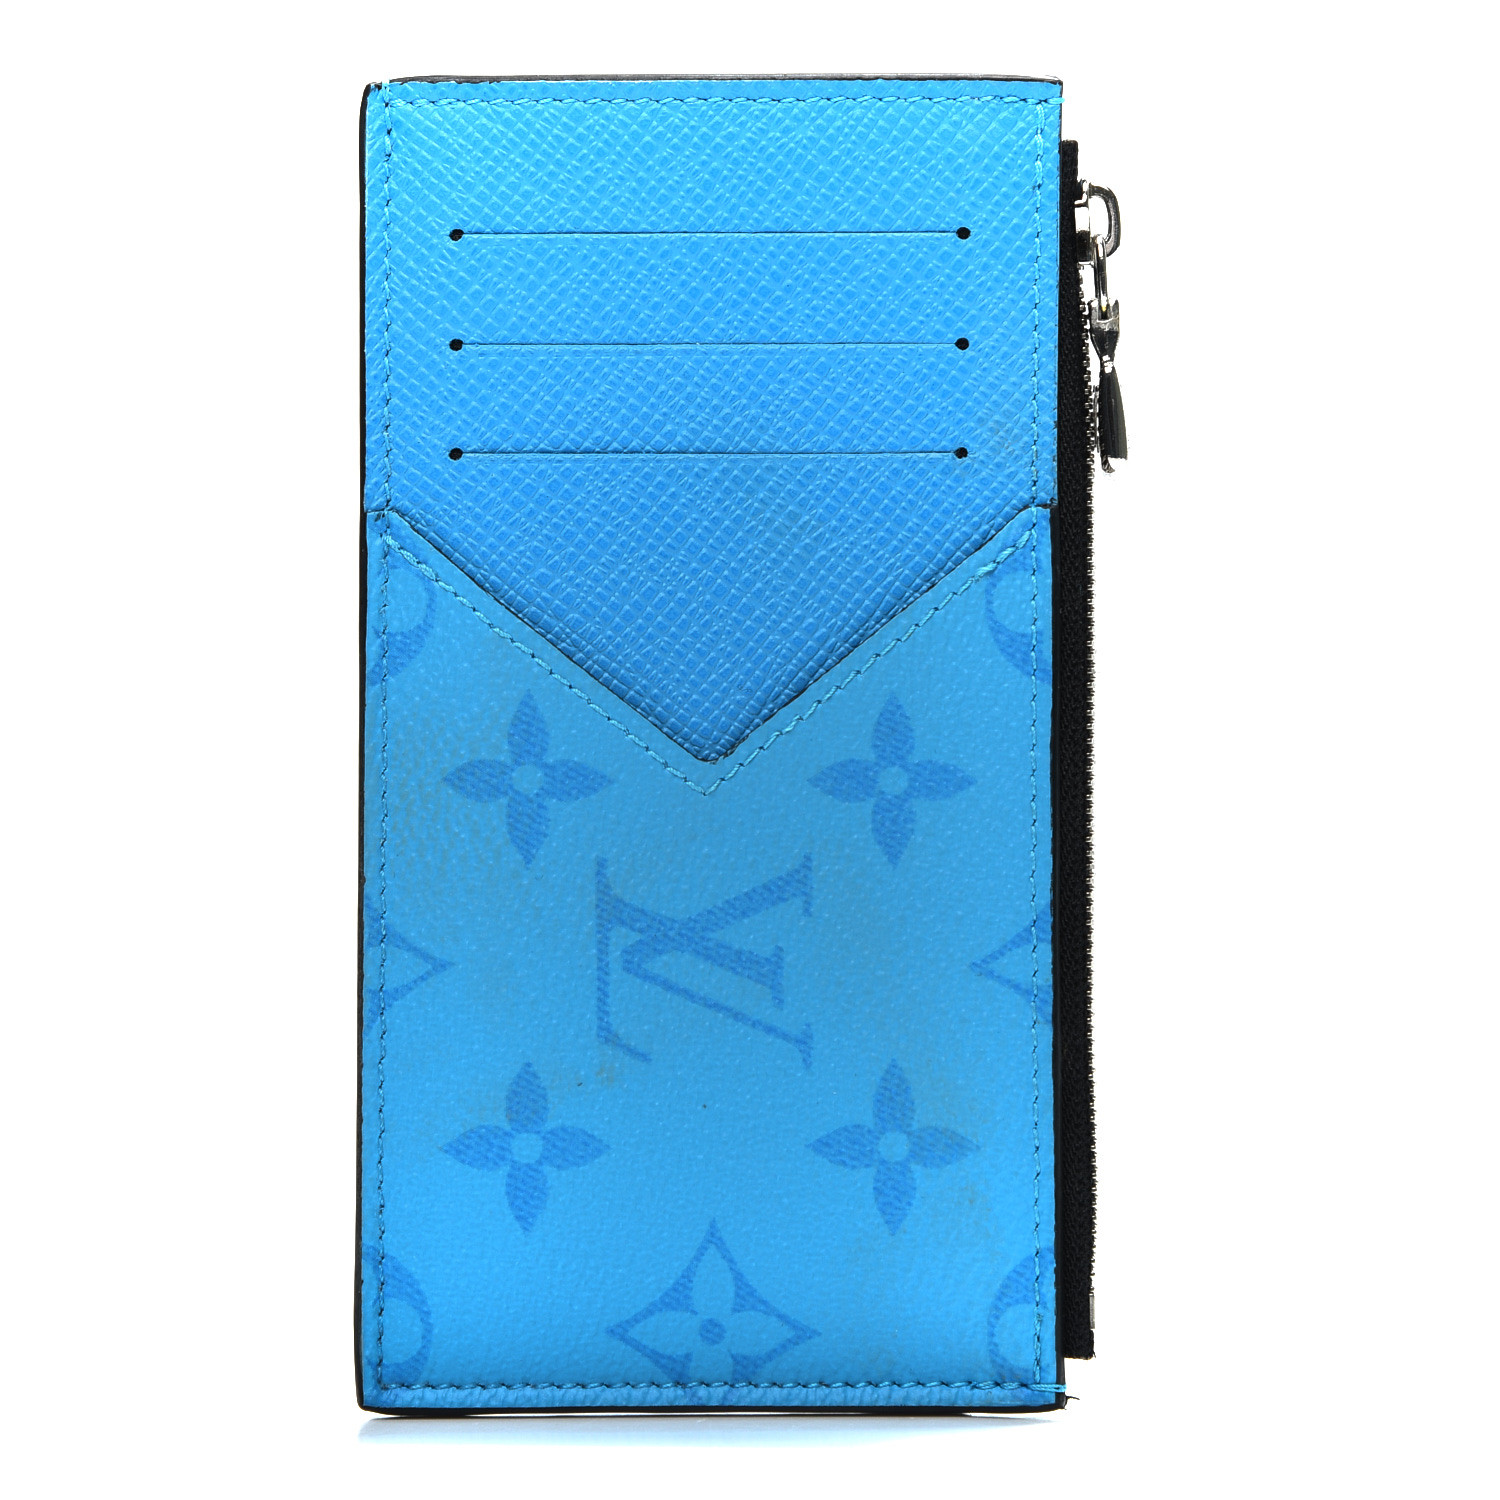 Louis Vuitton Monogram Savane Badge Holder - Blue Other